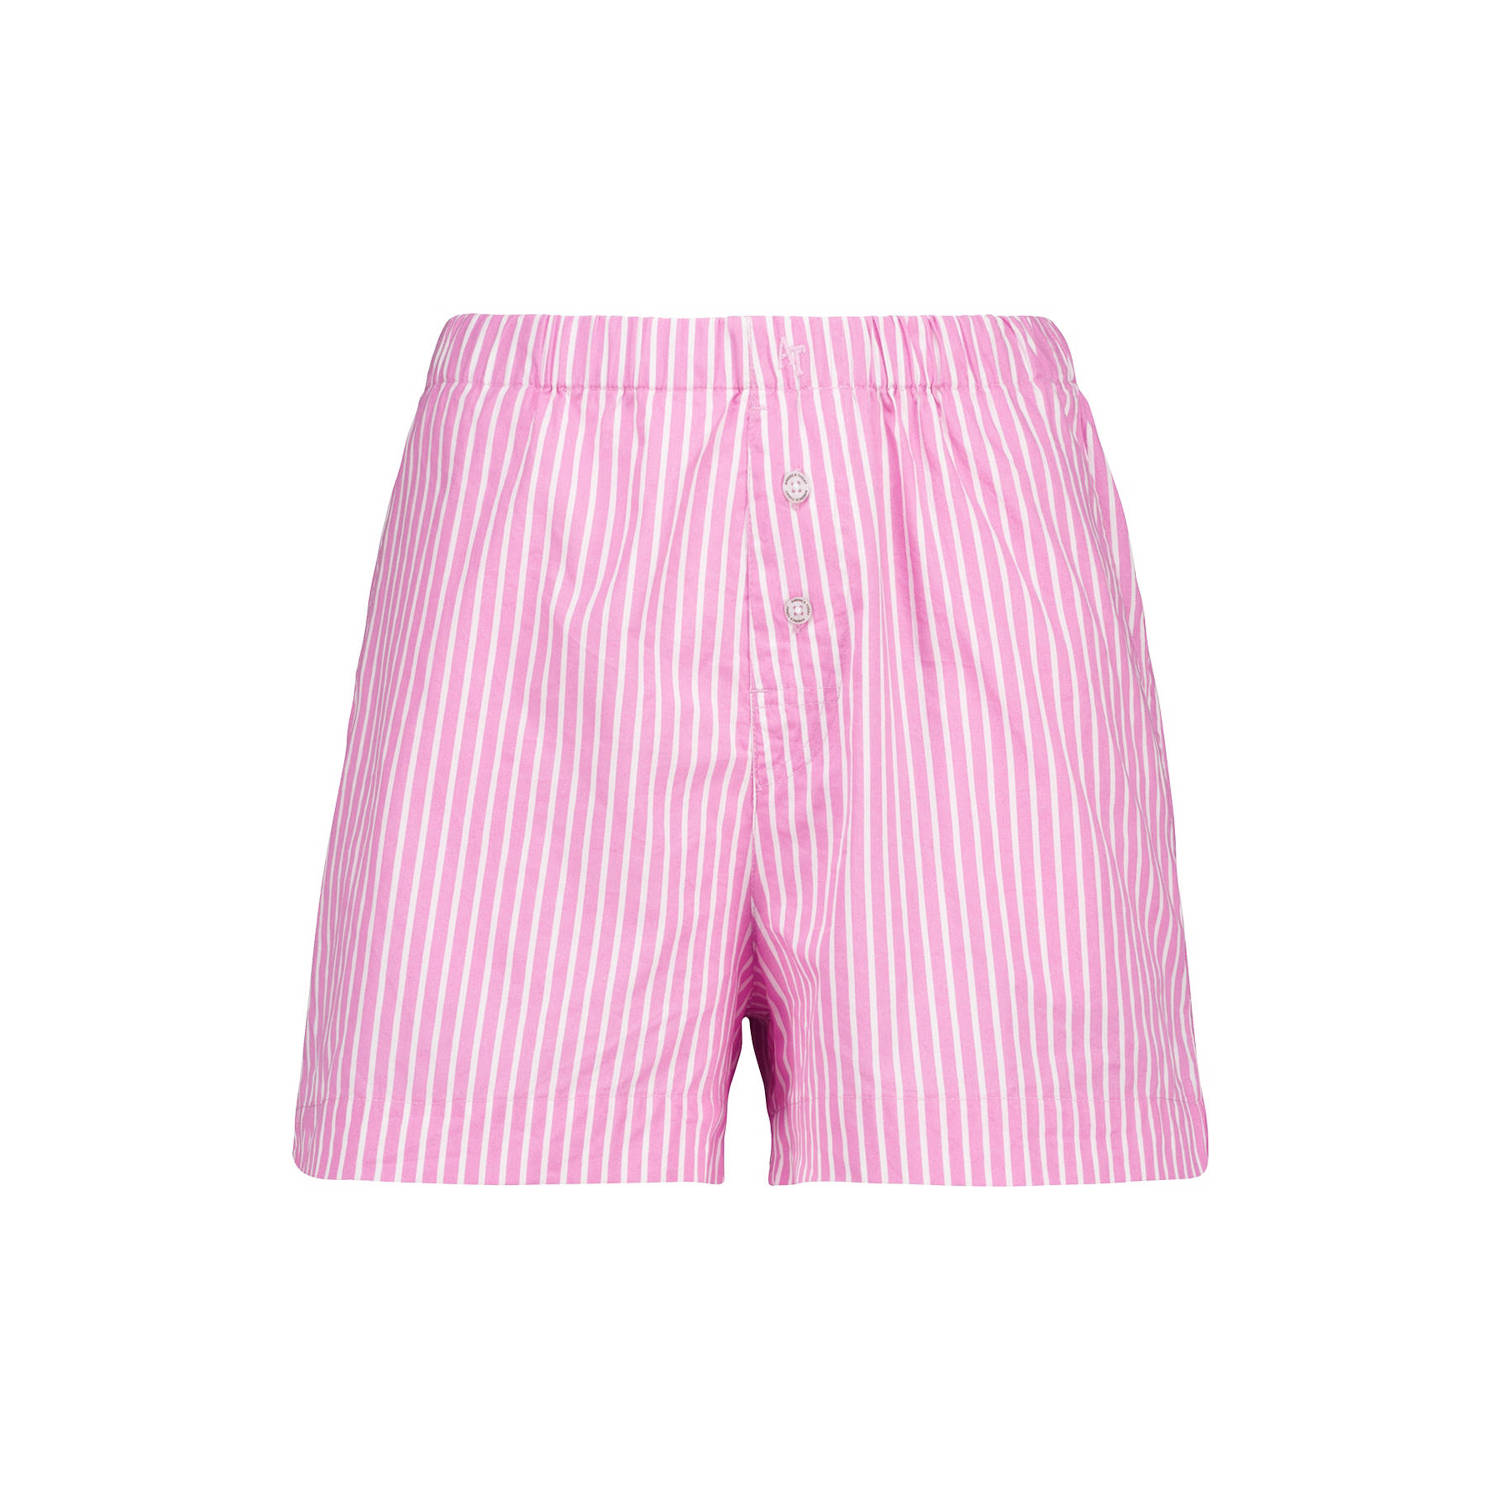 America Today pyjamashort Logan roze wit